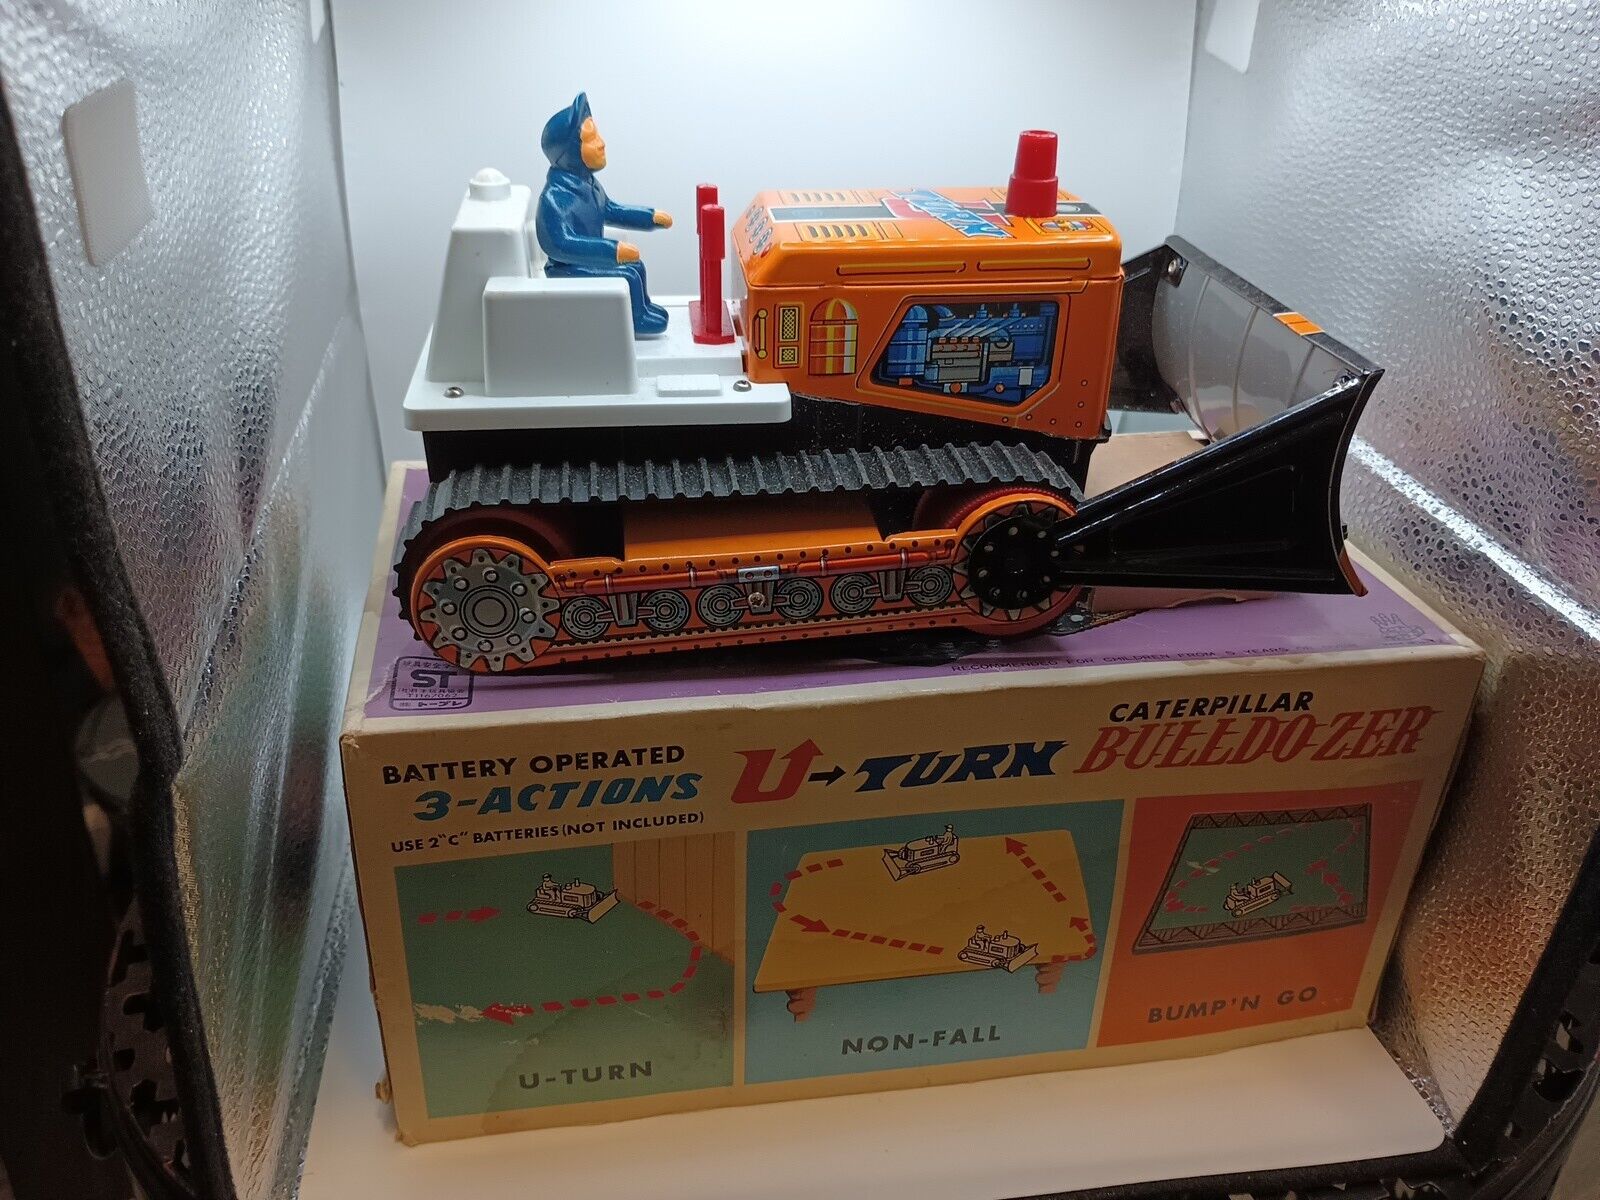 Vintage Battery Op U-TURN BULLDOZER Caterpillar Toy Tractor, TPS (Japan)